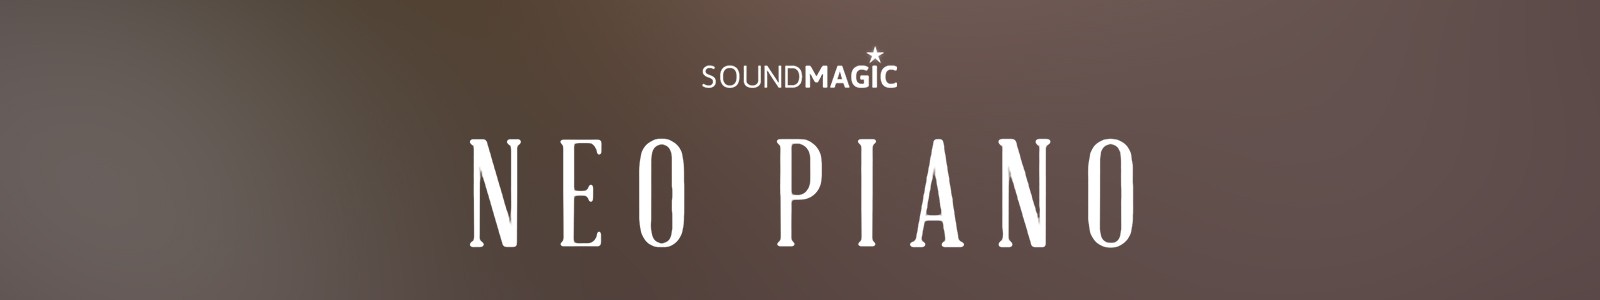 SOUNDMAGIC Neo Piano